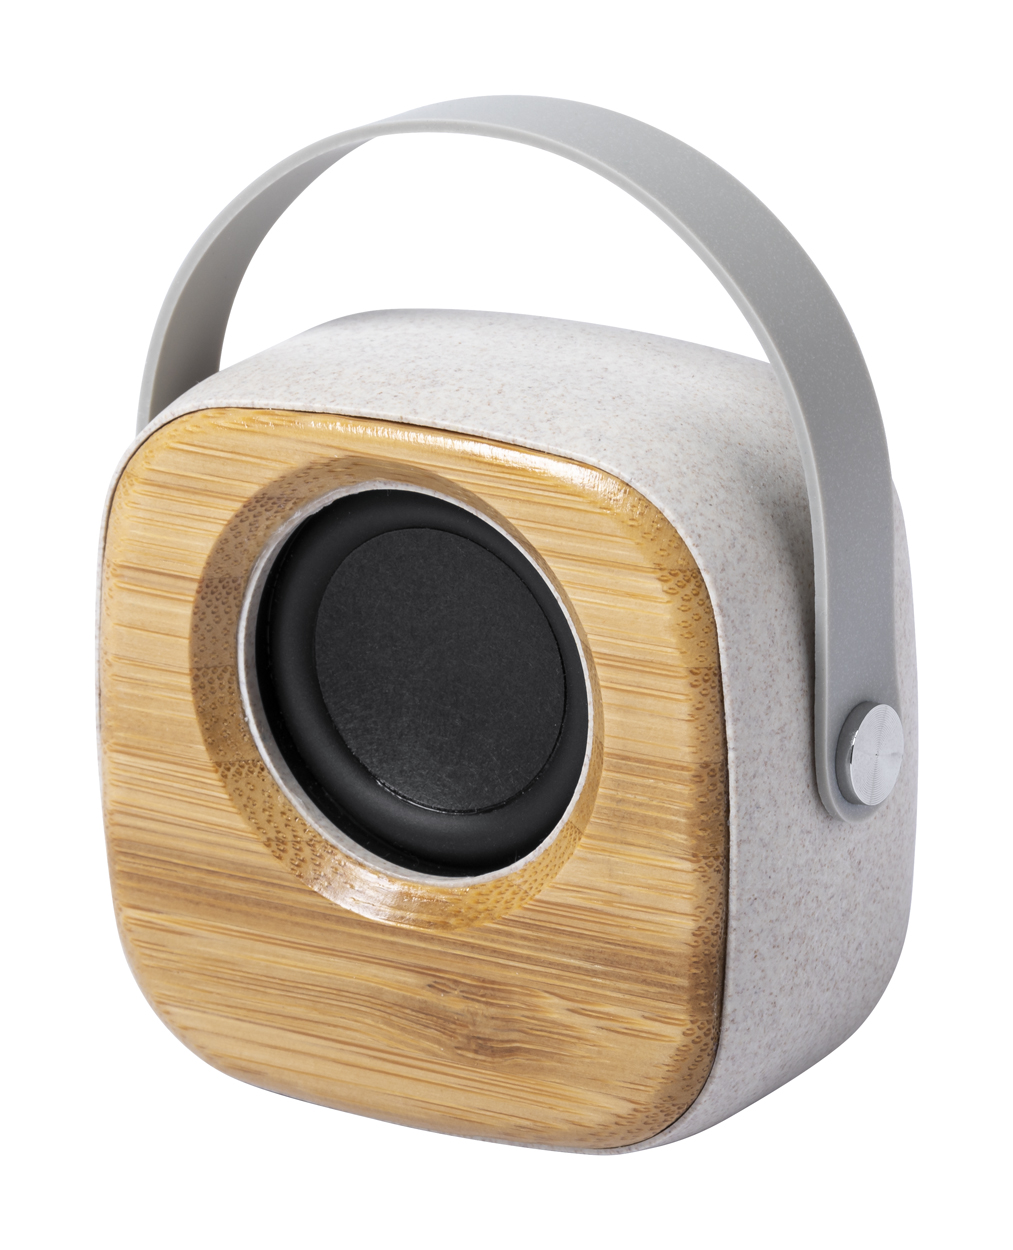 Kepir bluetooth speaker